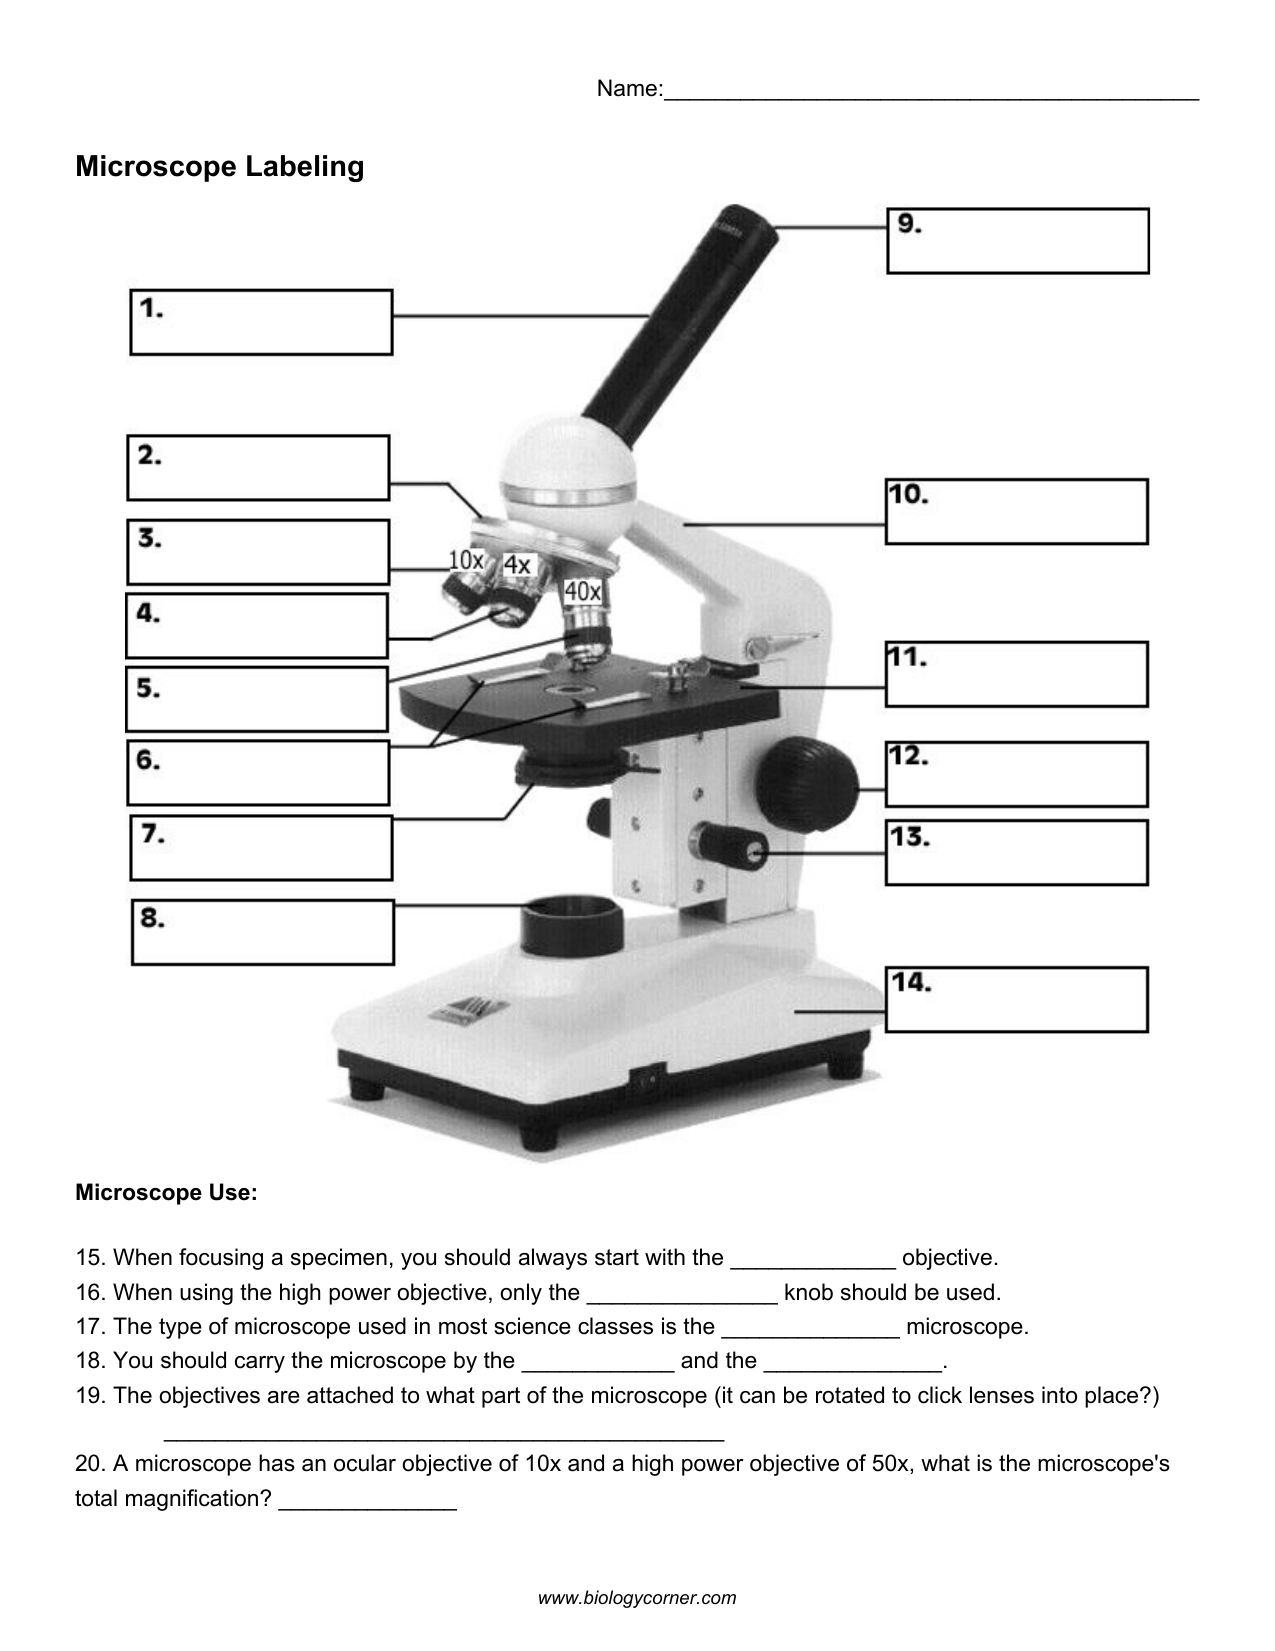 Microscope Parts Labeling Worksheet Pertaining To Microscope Parts And Use Worksheet